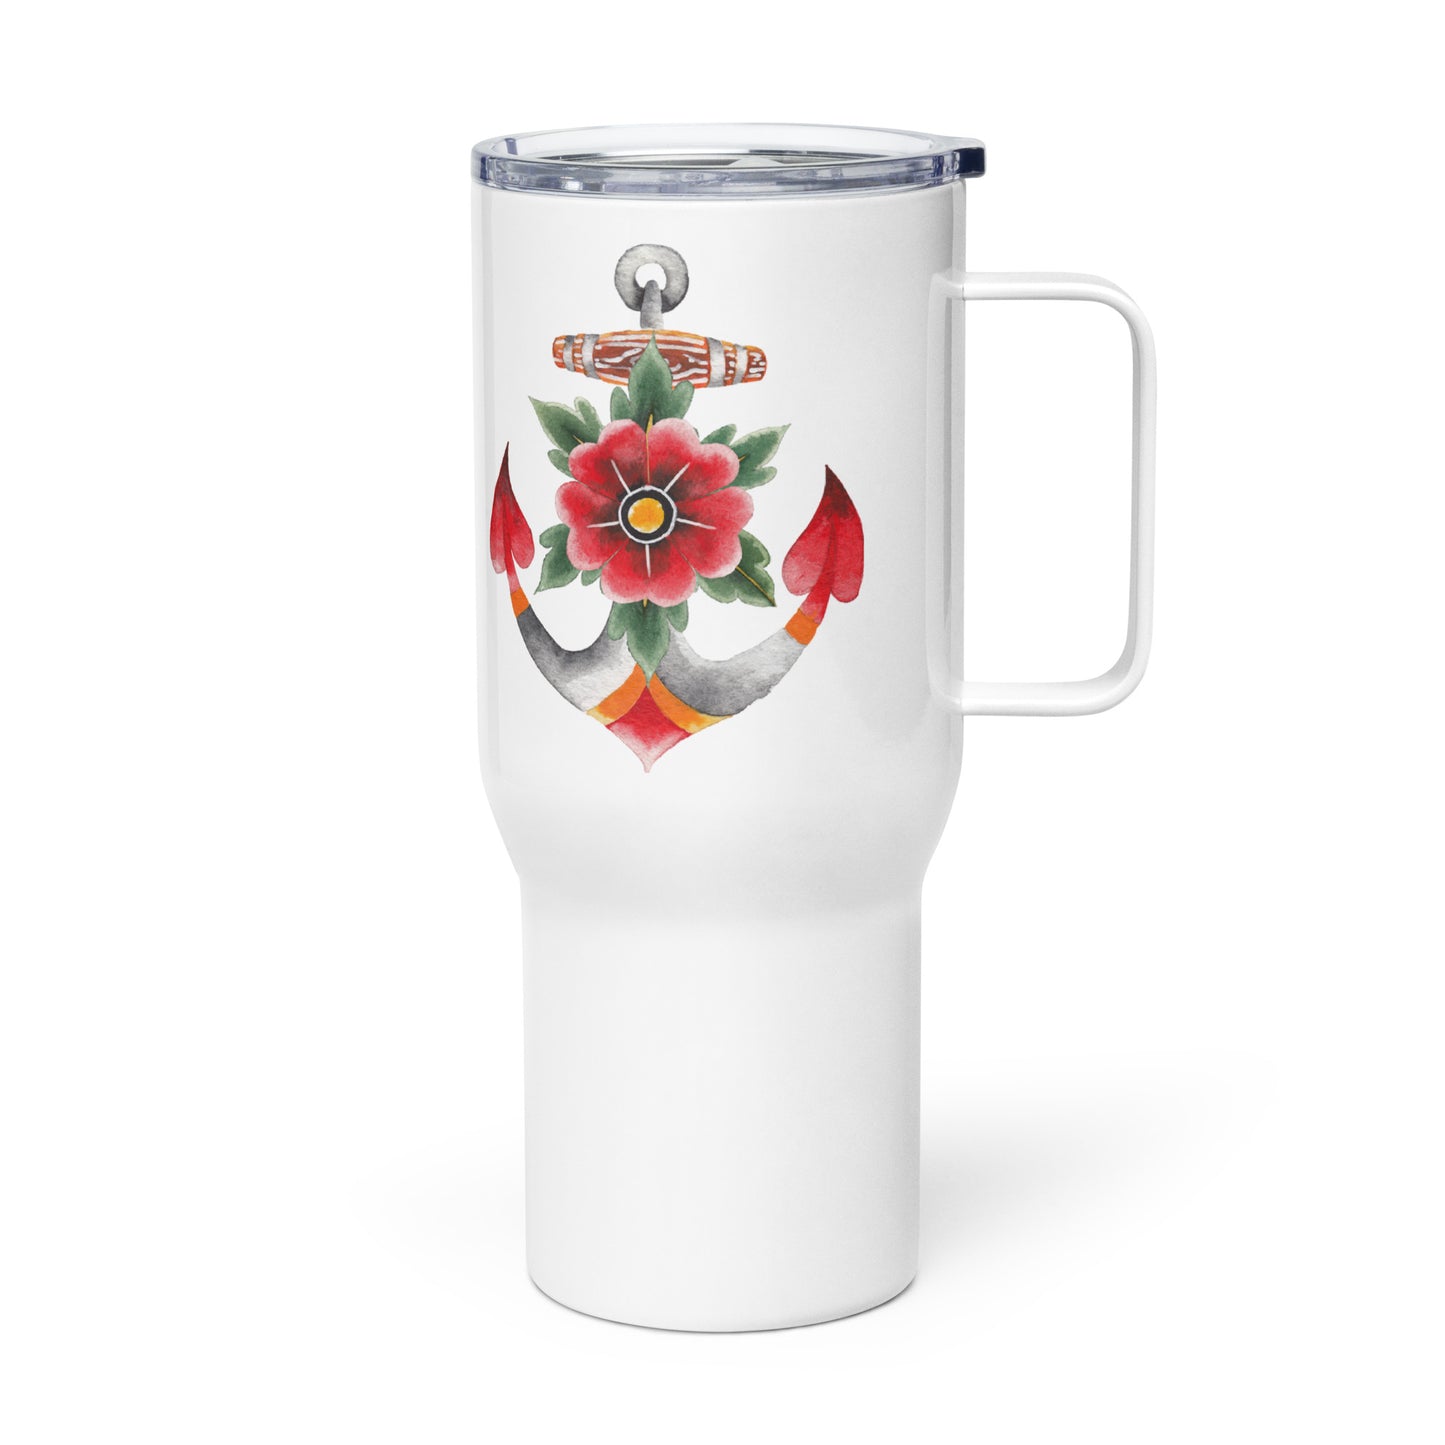 Travel mug with a handle Anchor Flower